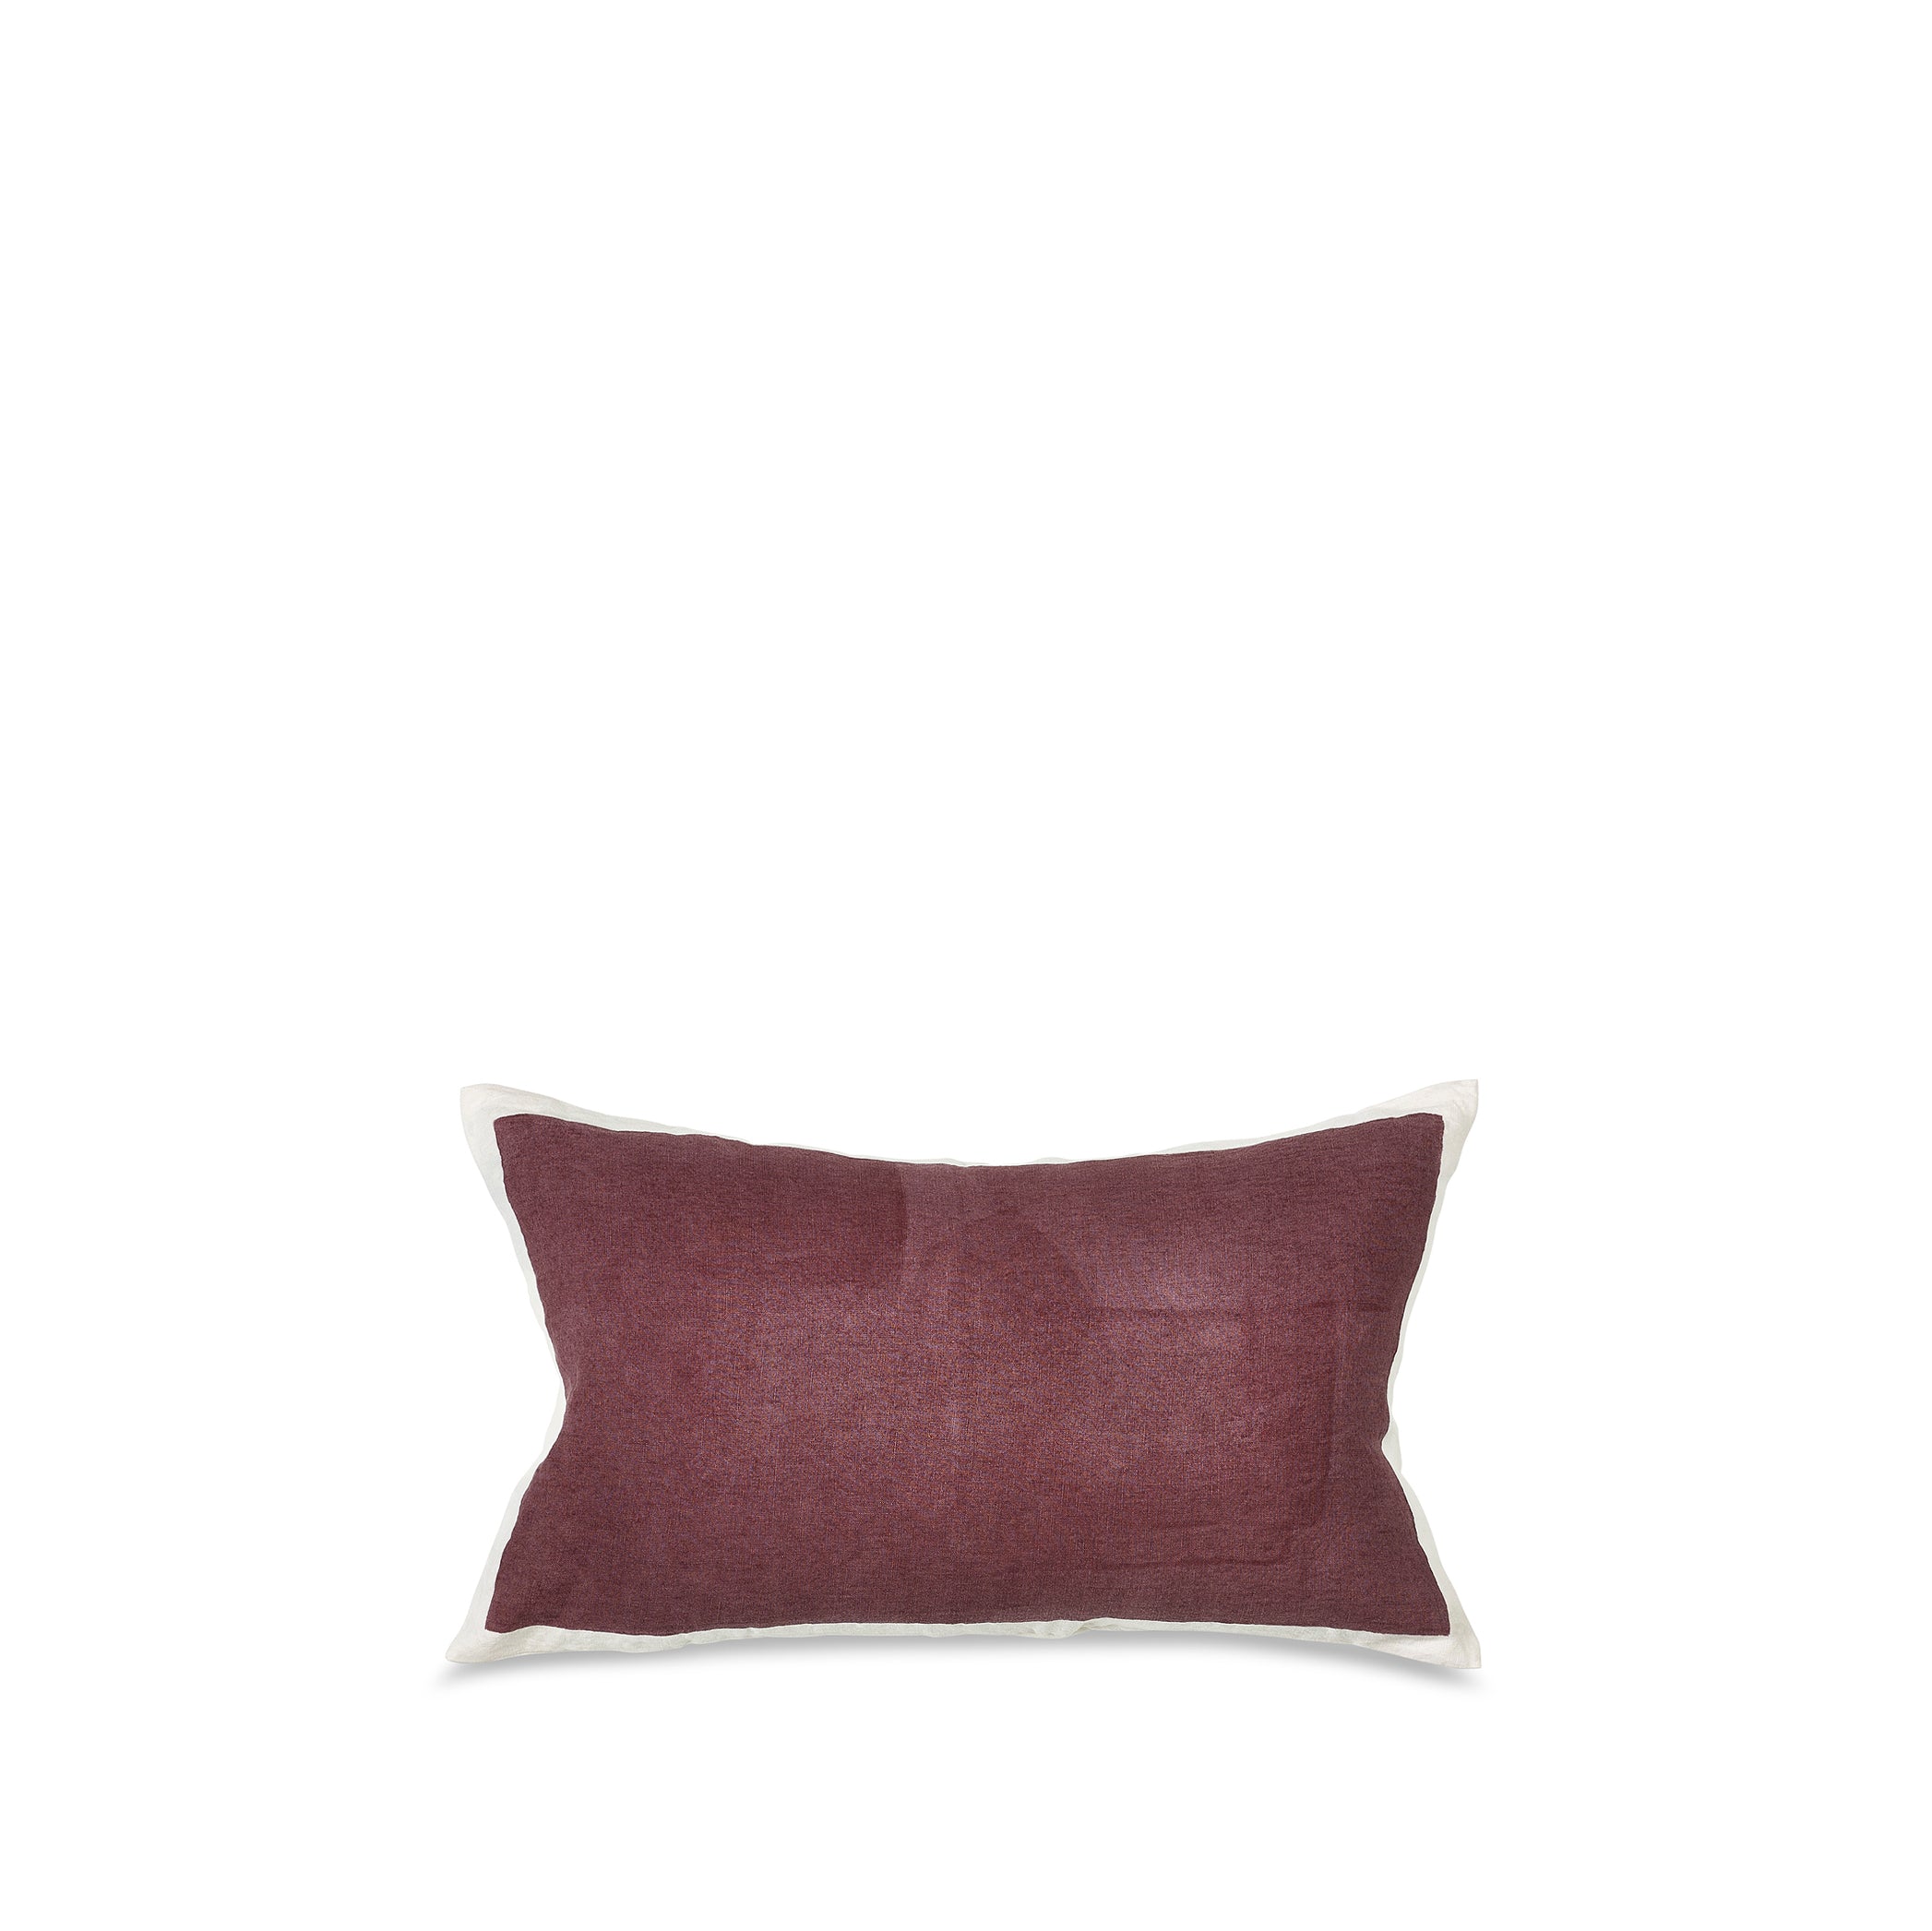 Hand Painted Linen Cushion in Grape, 50cm x 30cm